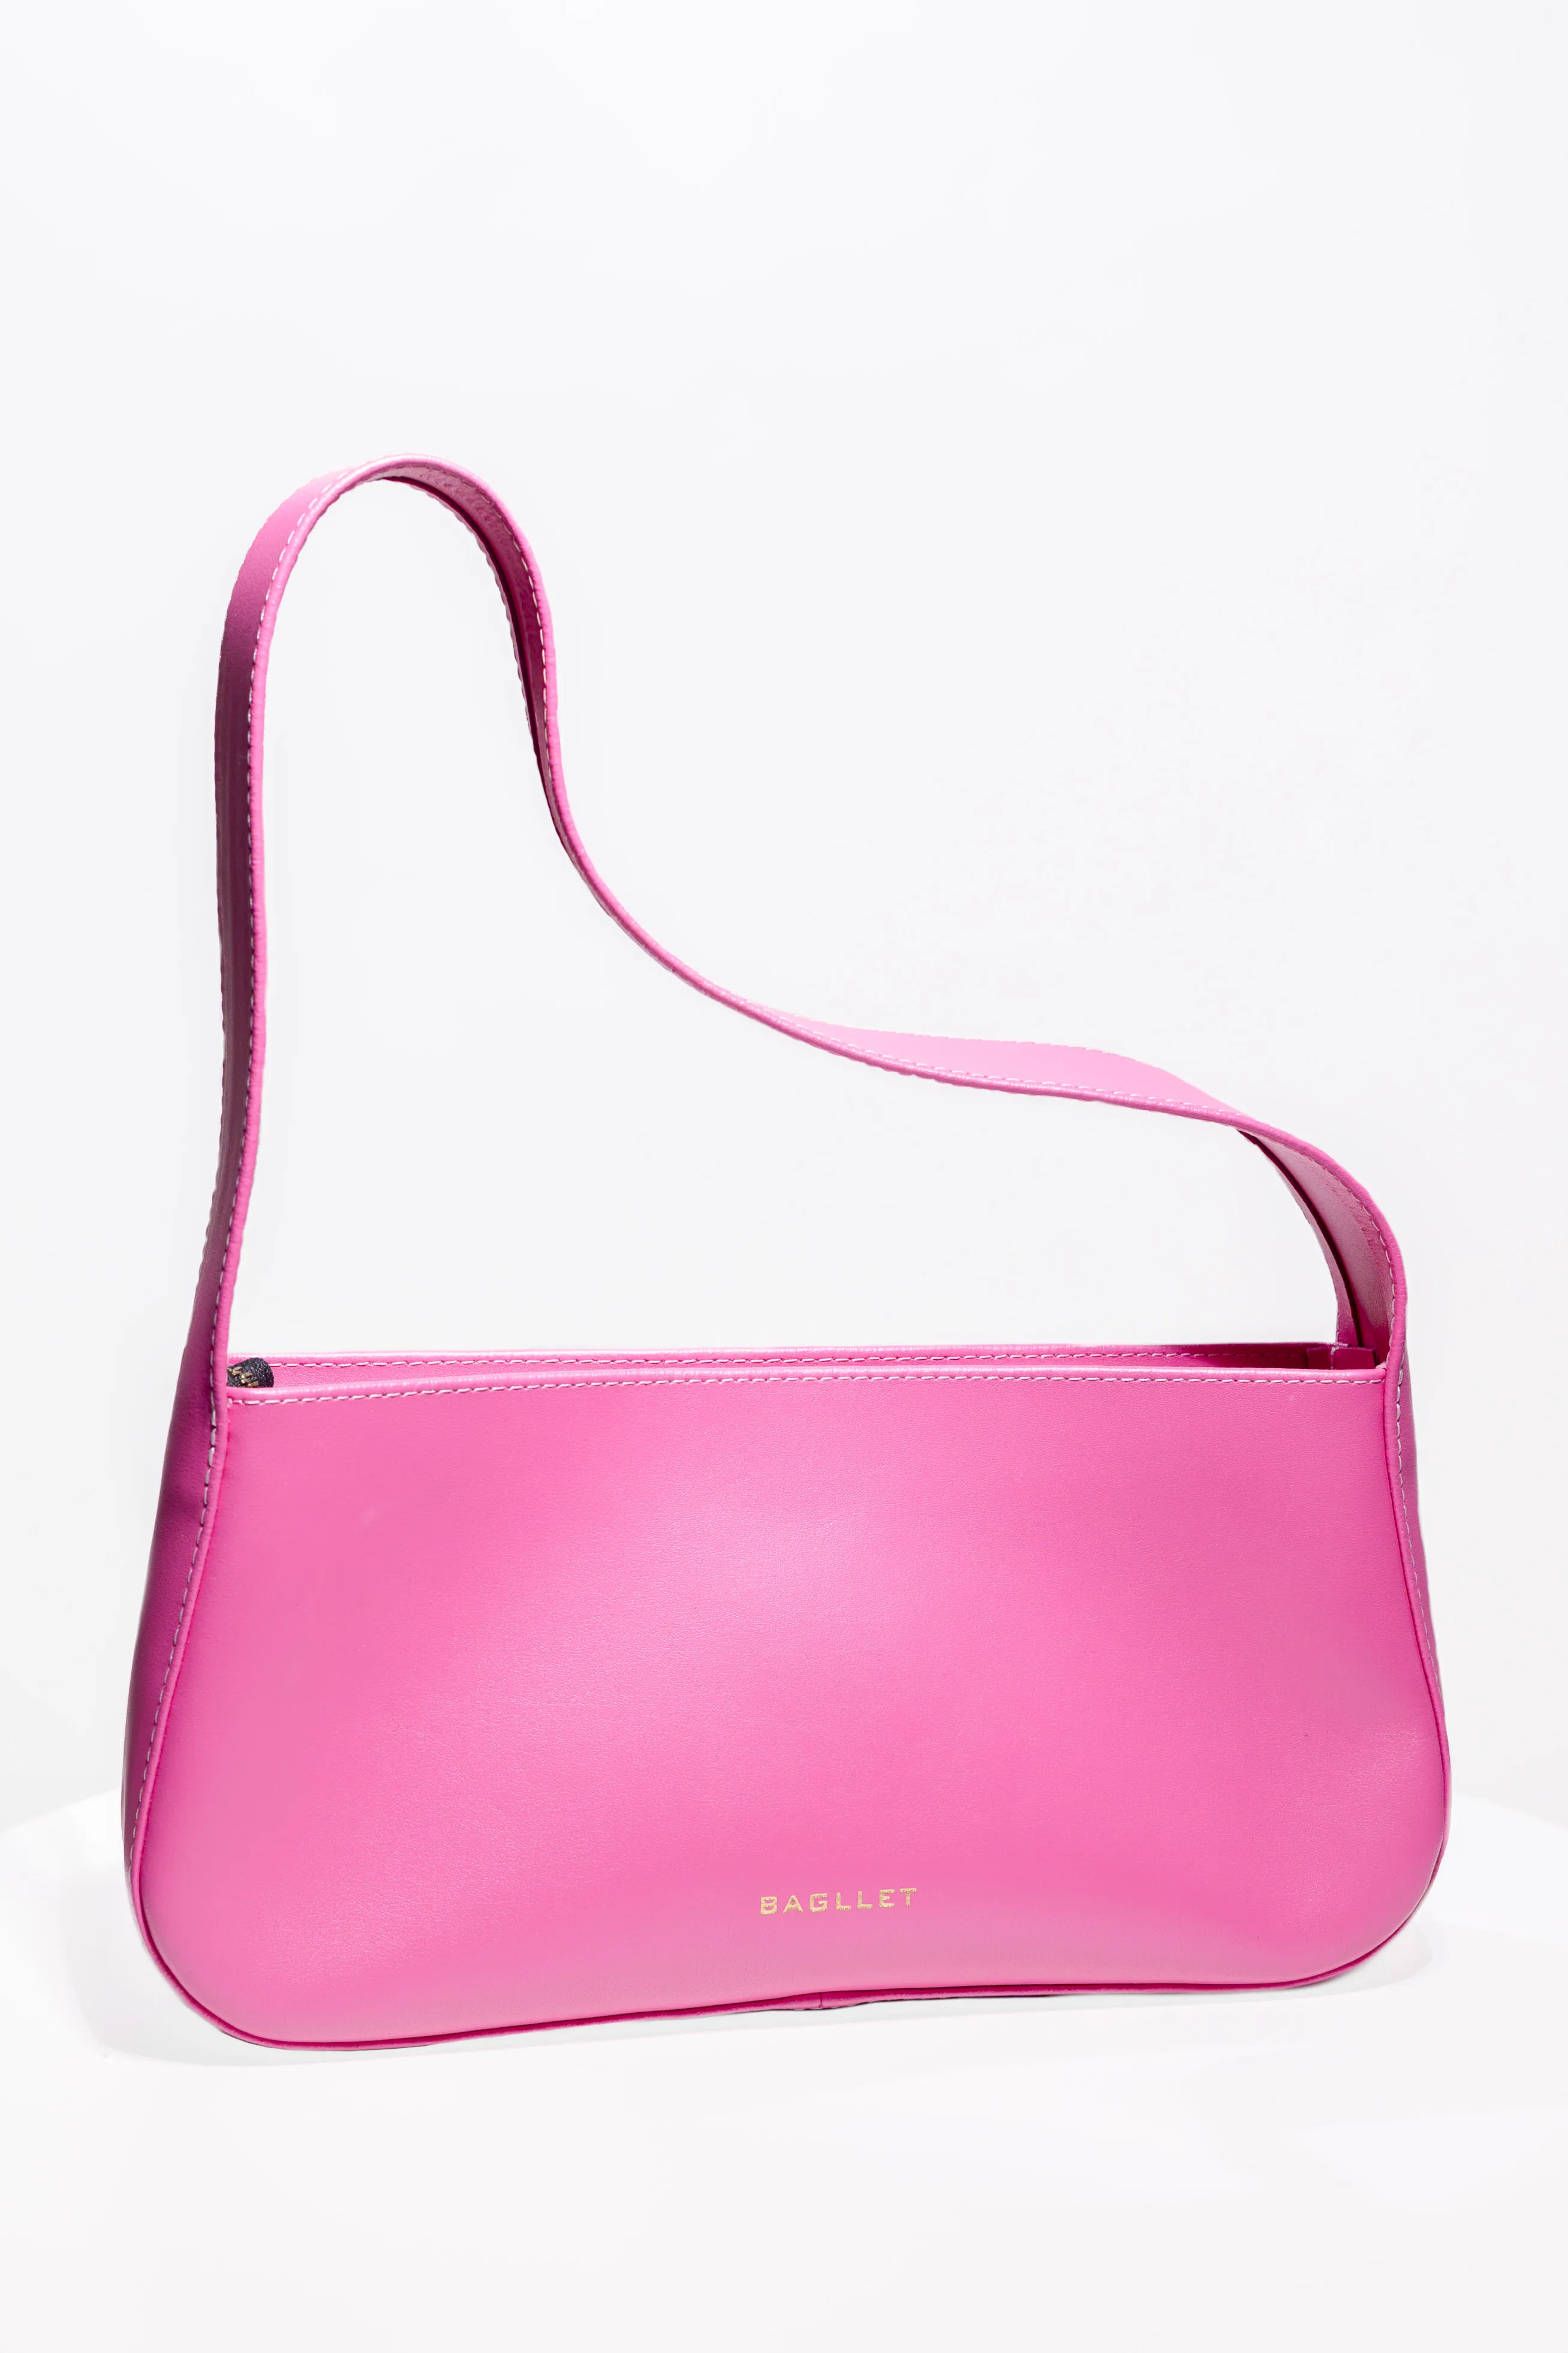 Handbag Bagllet - B111 Capsule Limited Edition